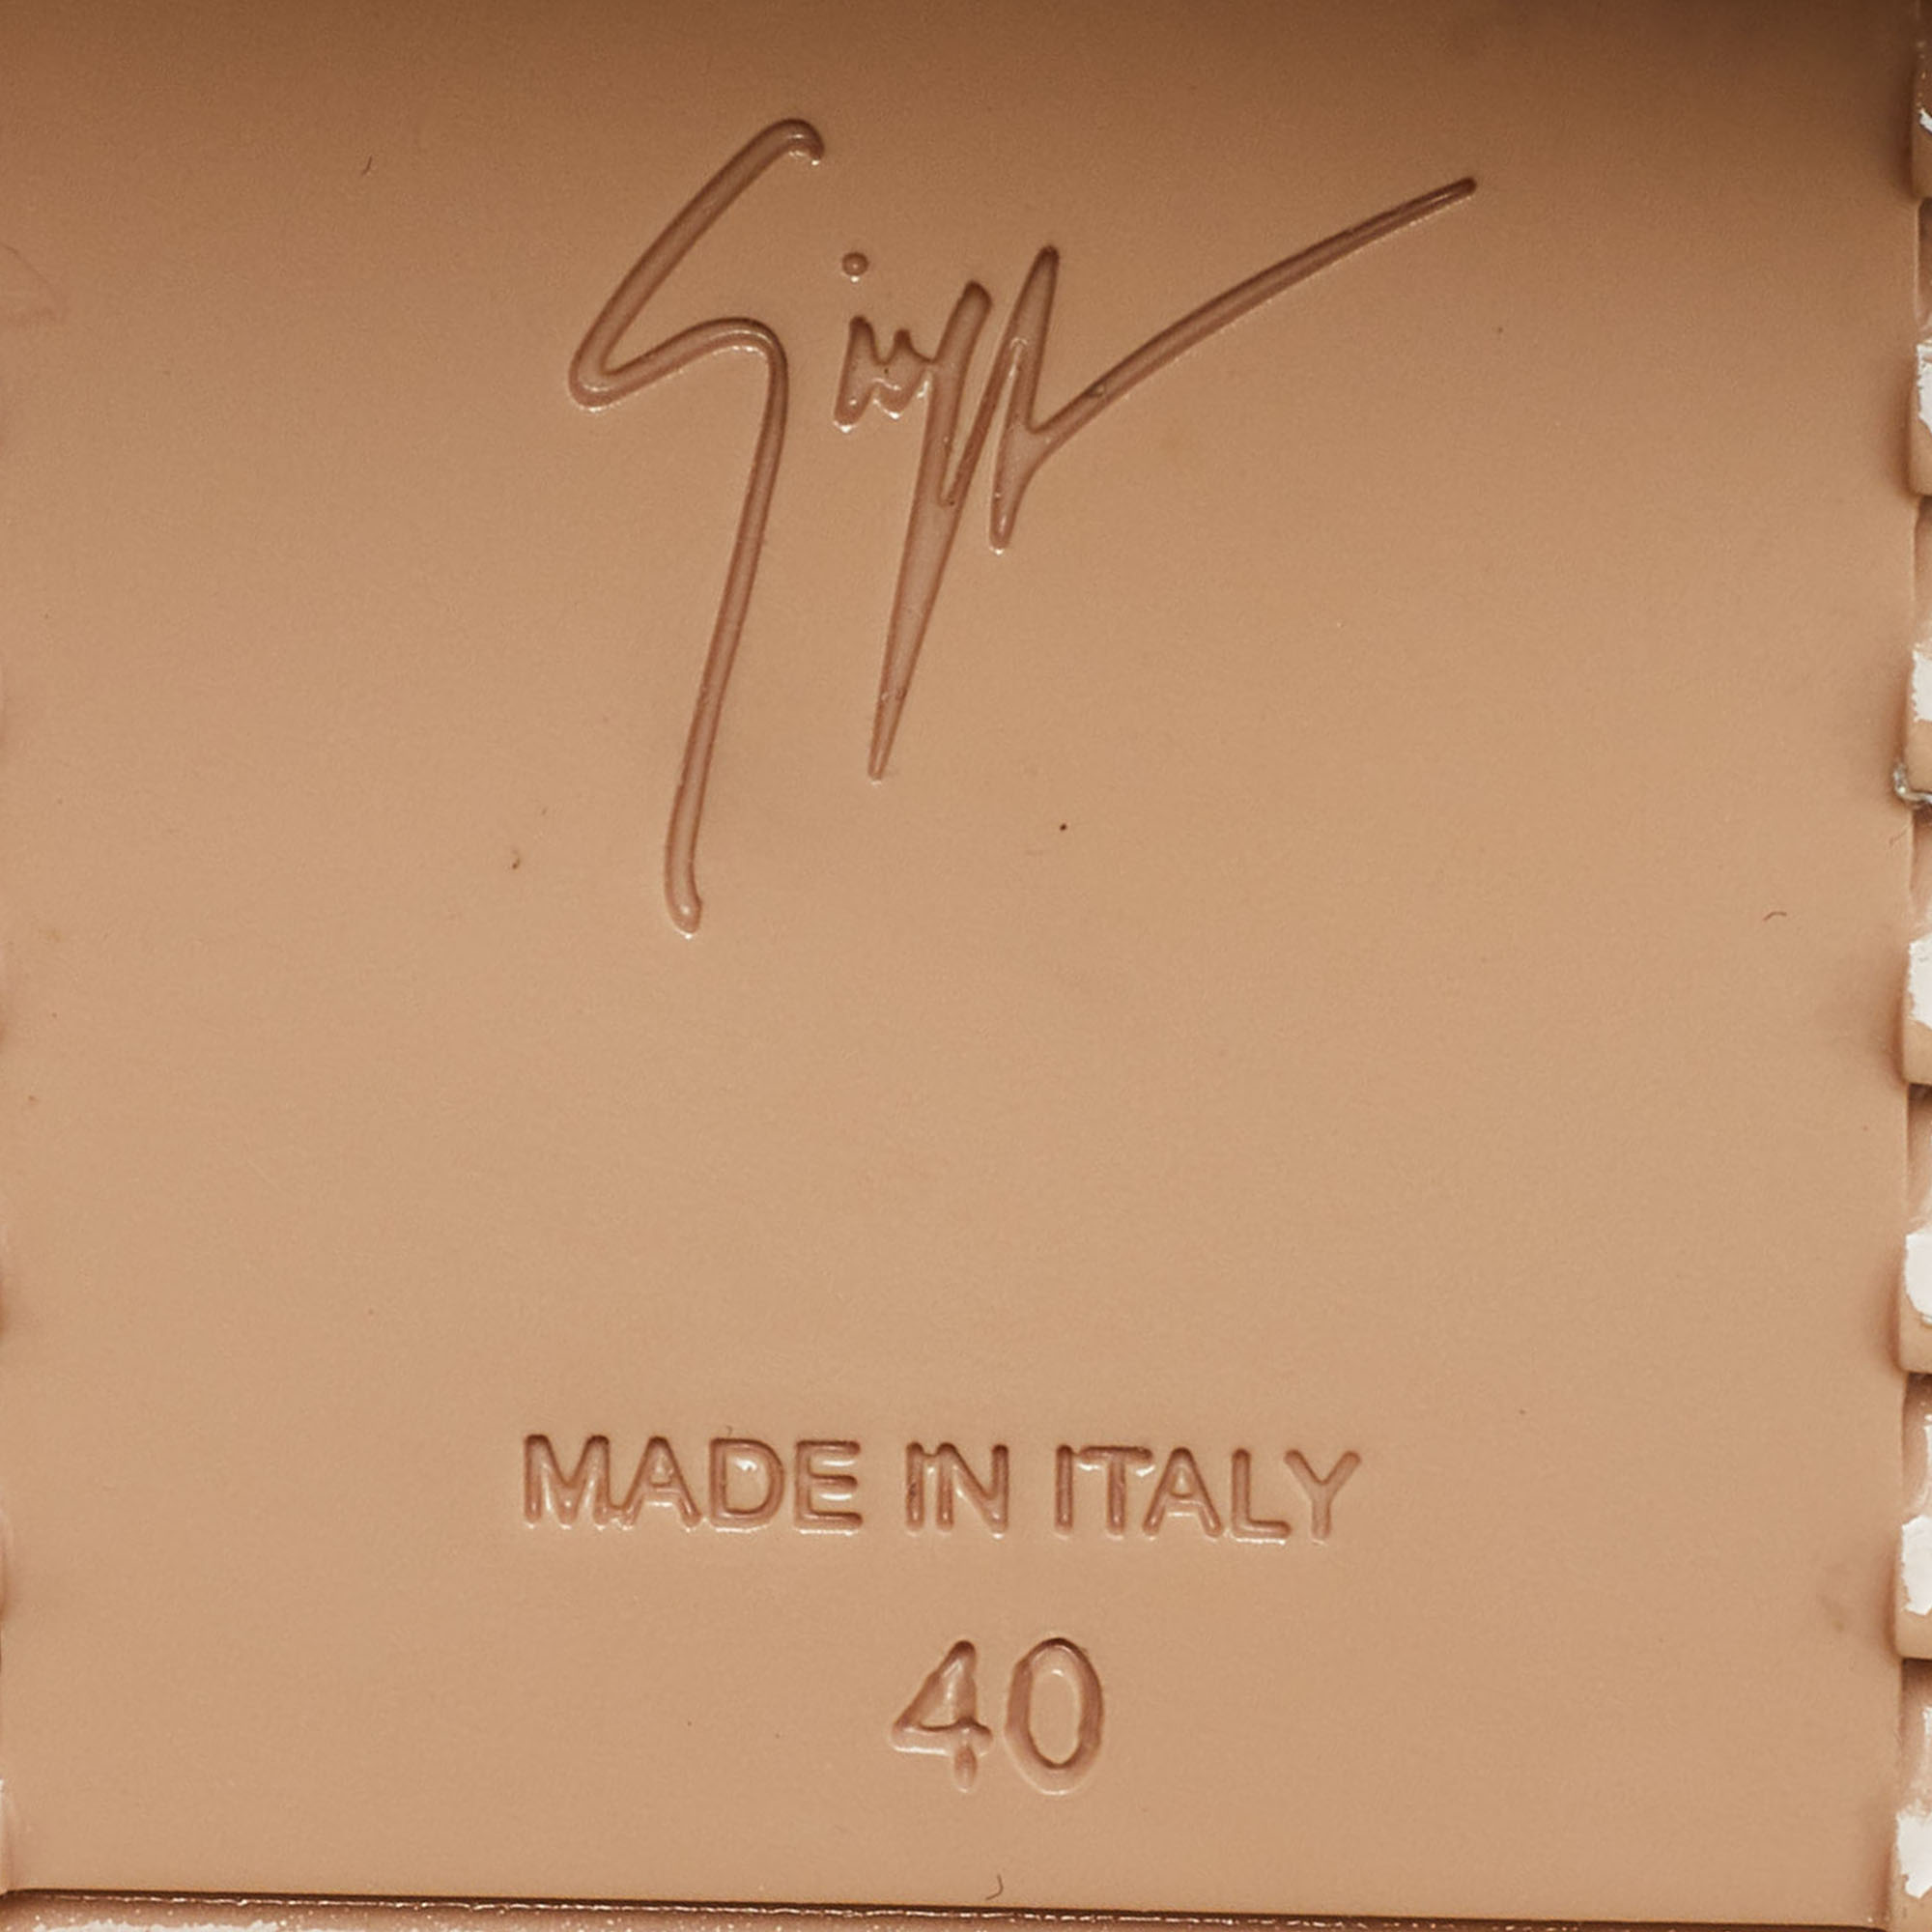 Giuseppe Zanotti Beige Patent Leather Frankie Sneakers Size 40